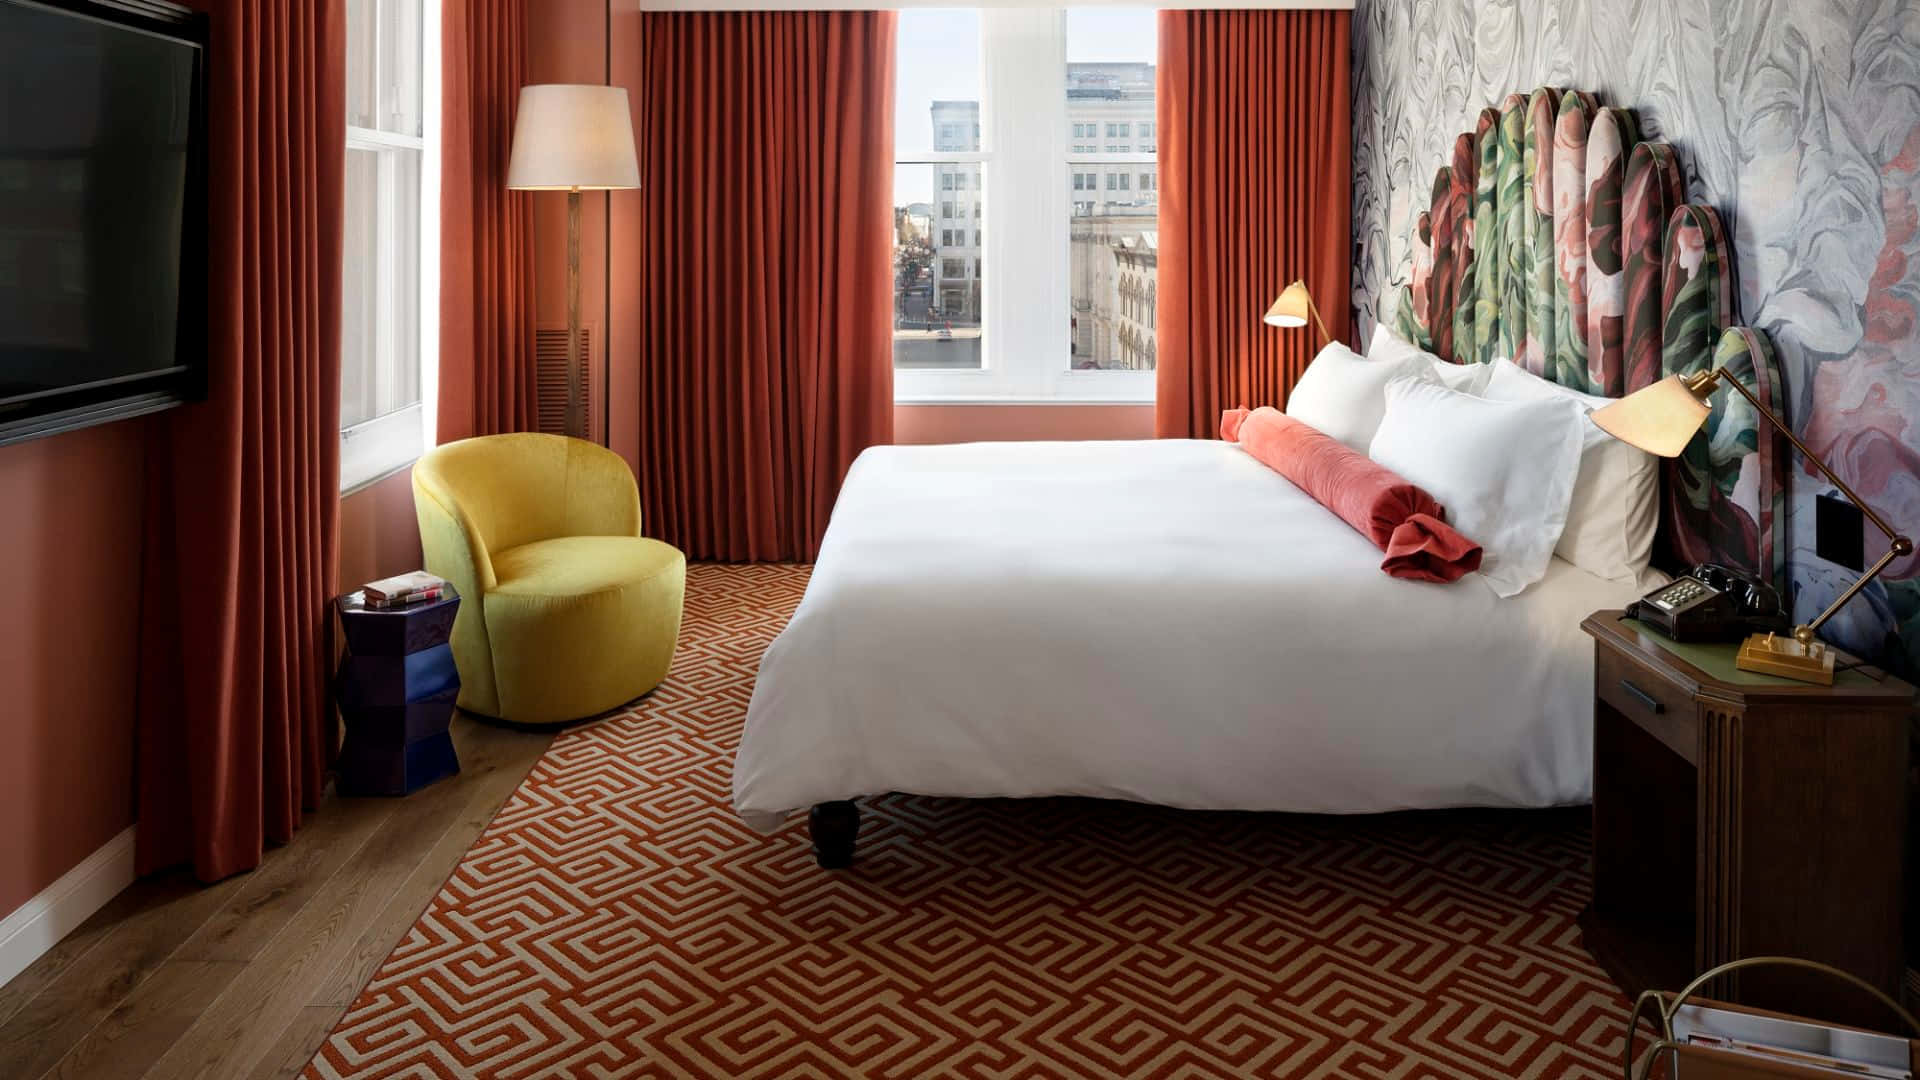 Luxury Hotel Room with Modern Decor